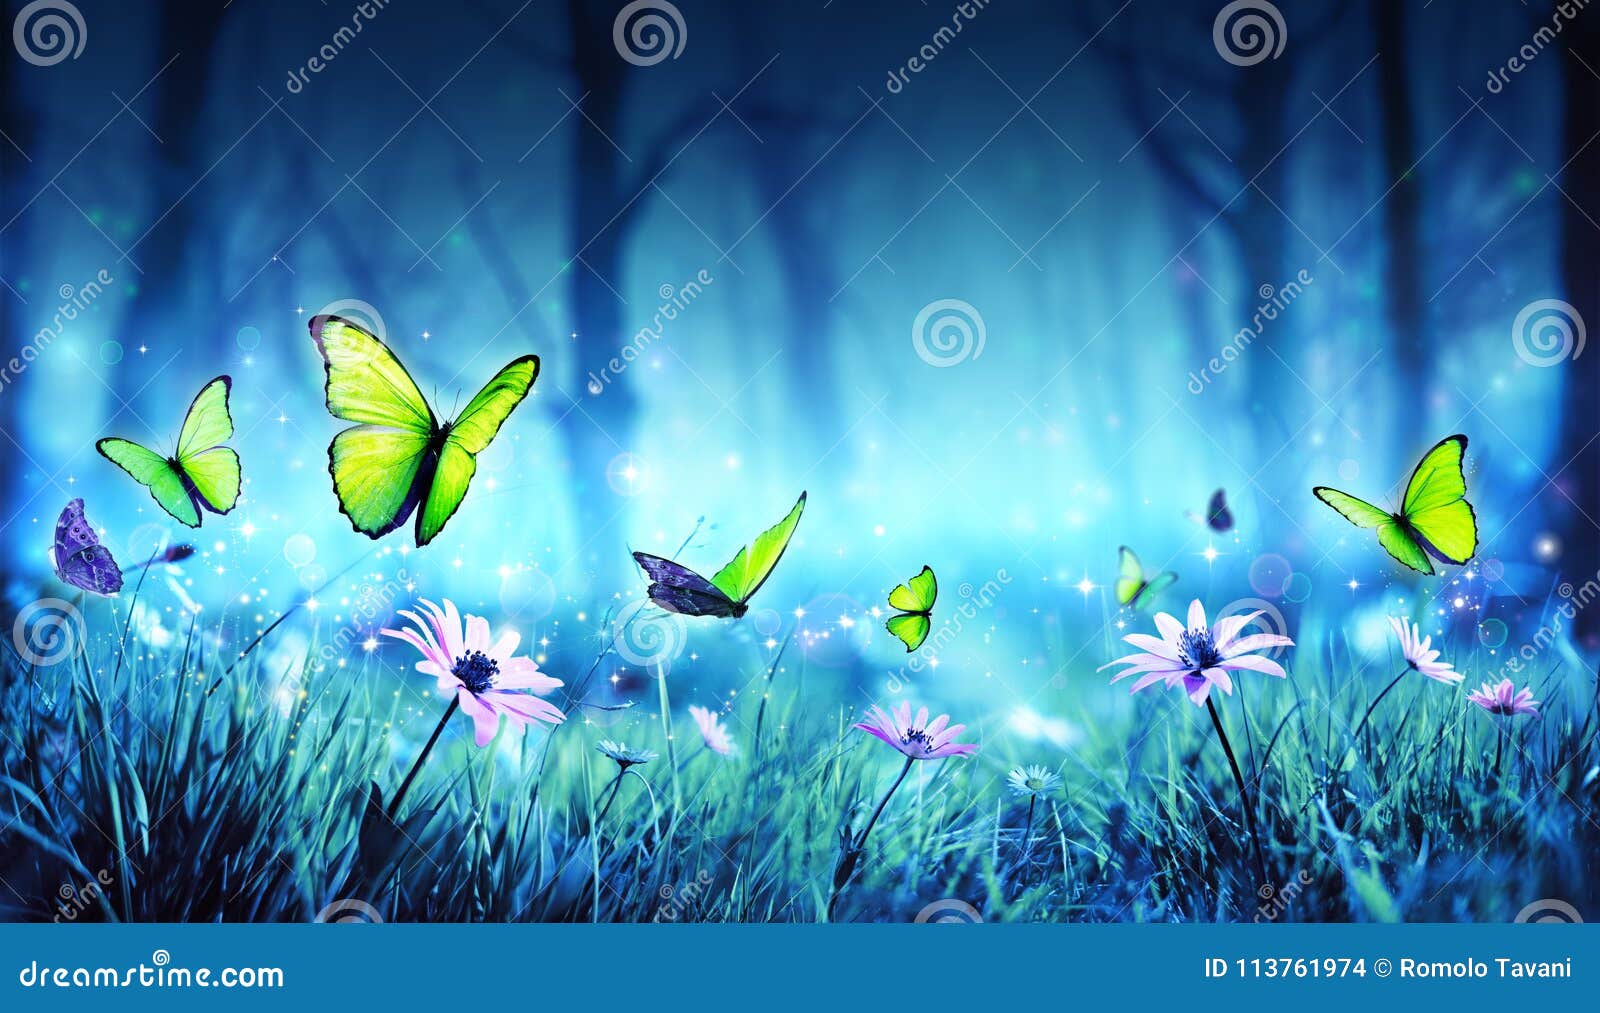 fairy butterflies in mystic forest